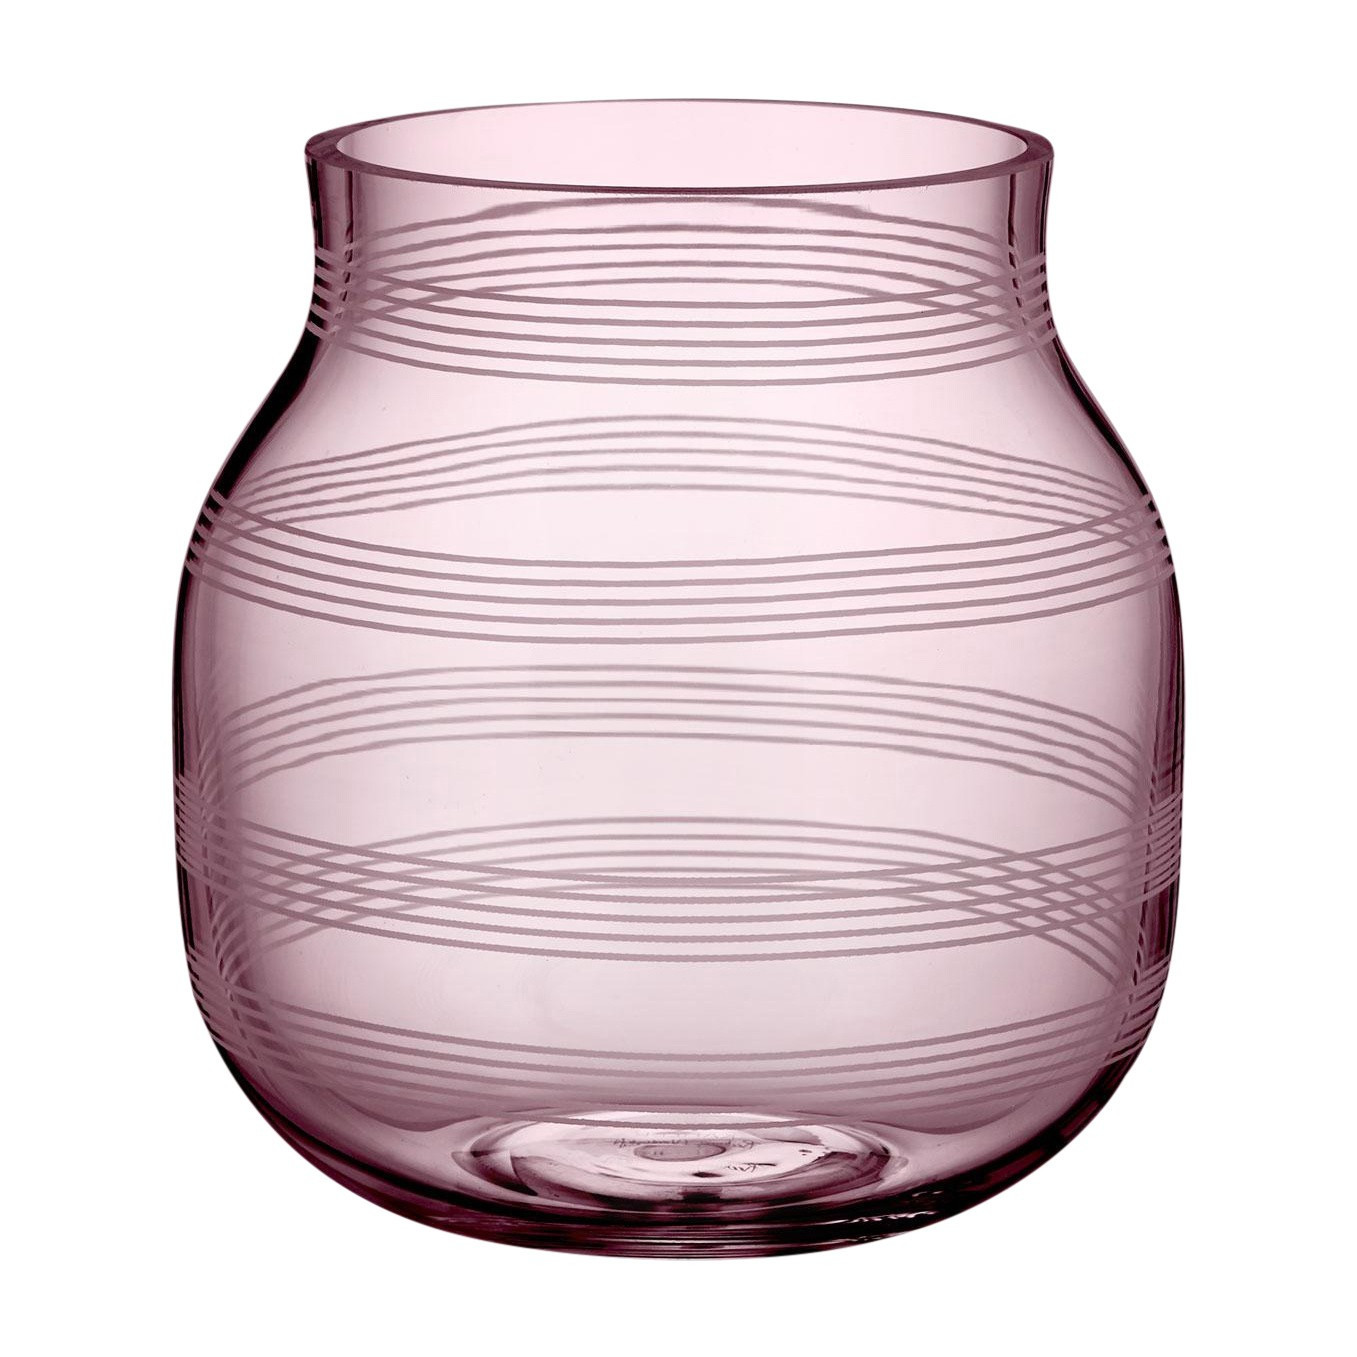 24 Unique Big Vases for Sale 2024 free download big vases for sale of kac2a4hler omaggio glass vase h 17cm ambientedirect with kaehler omaggio glasvase h 17cm 1357x1357 id1922376 cdd758e4260a859ee9db9bec5014a957